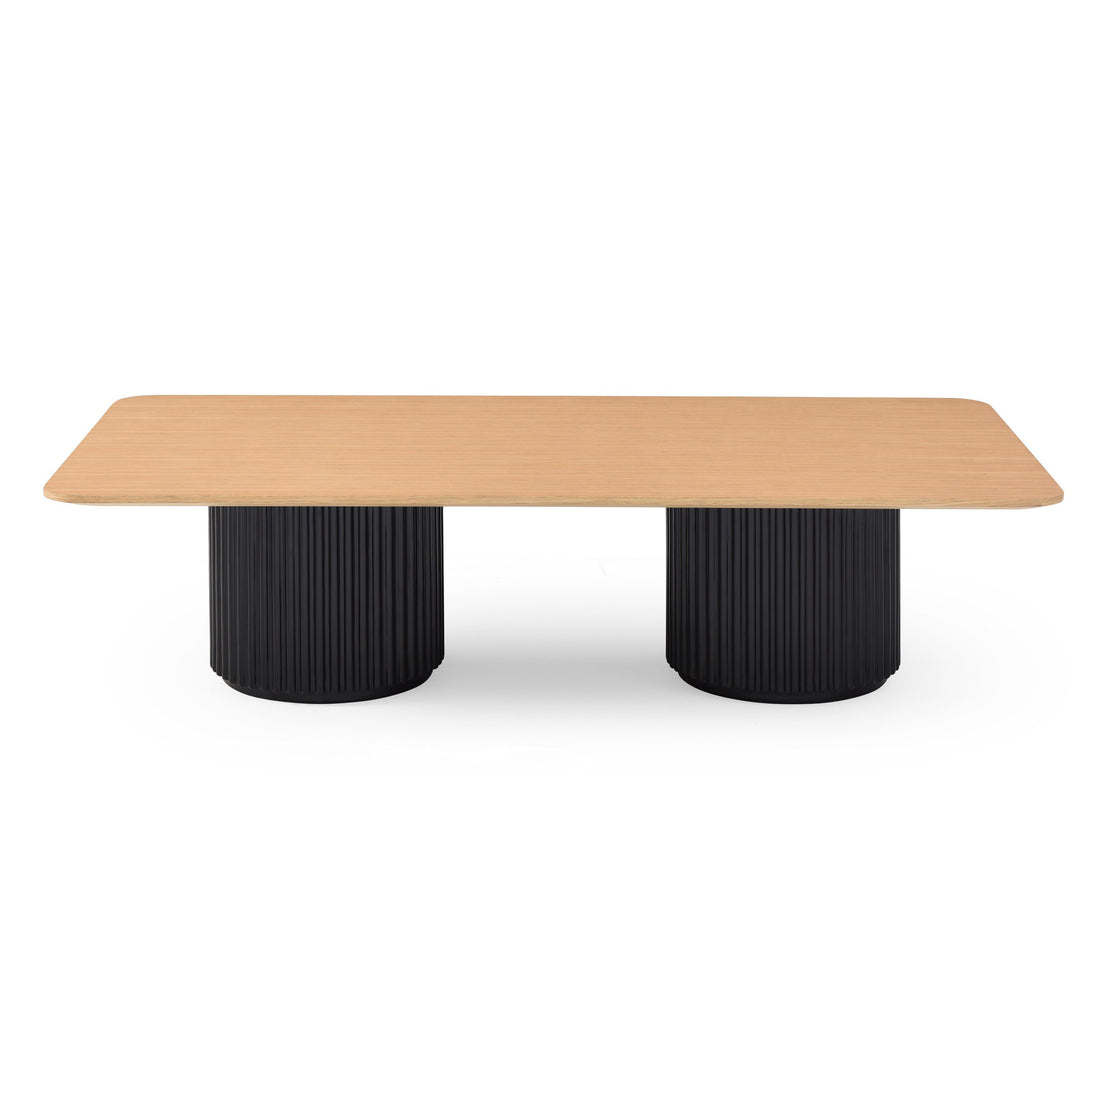 Lantine Coffee Table Double PedestalAsh/Black